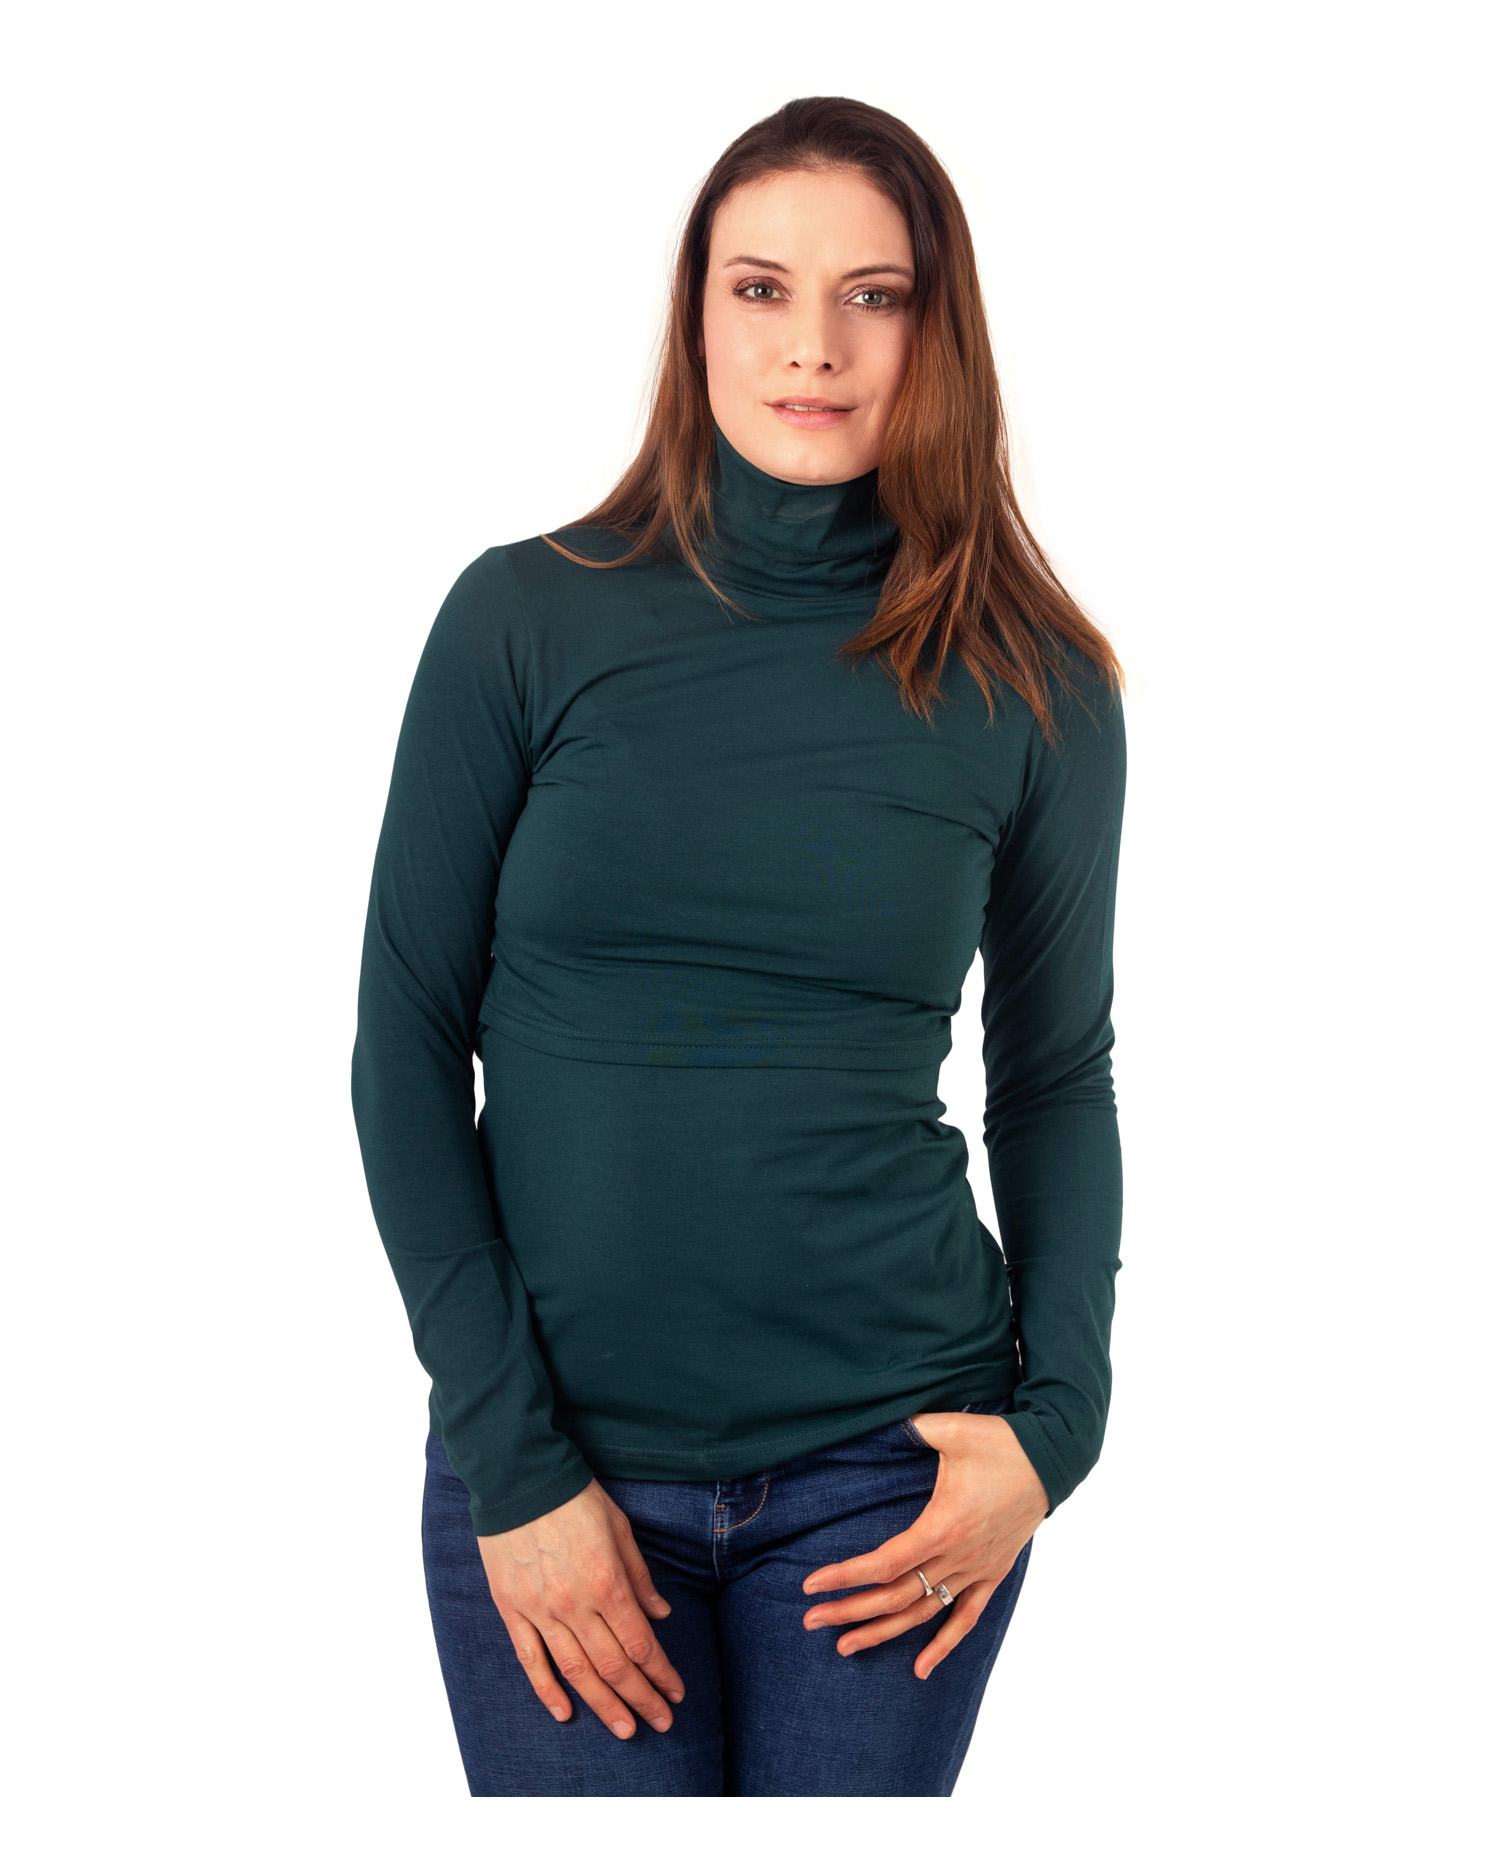 Breast-feeding roll-colar T-shirt Katerina, dark green